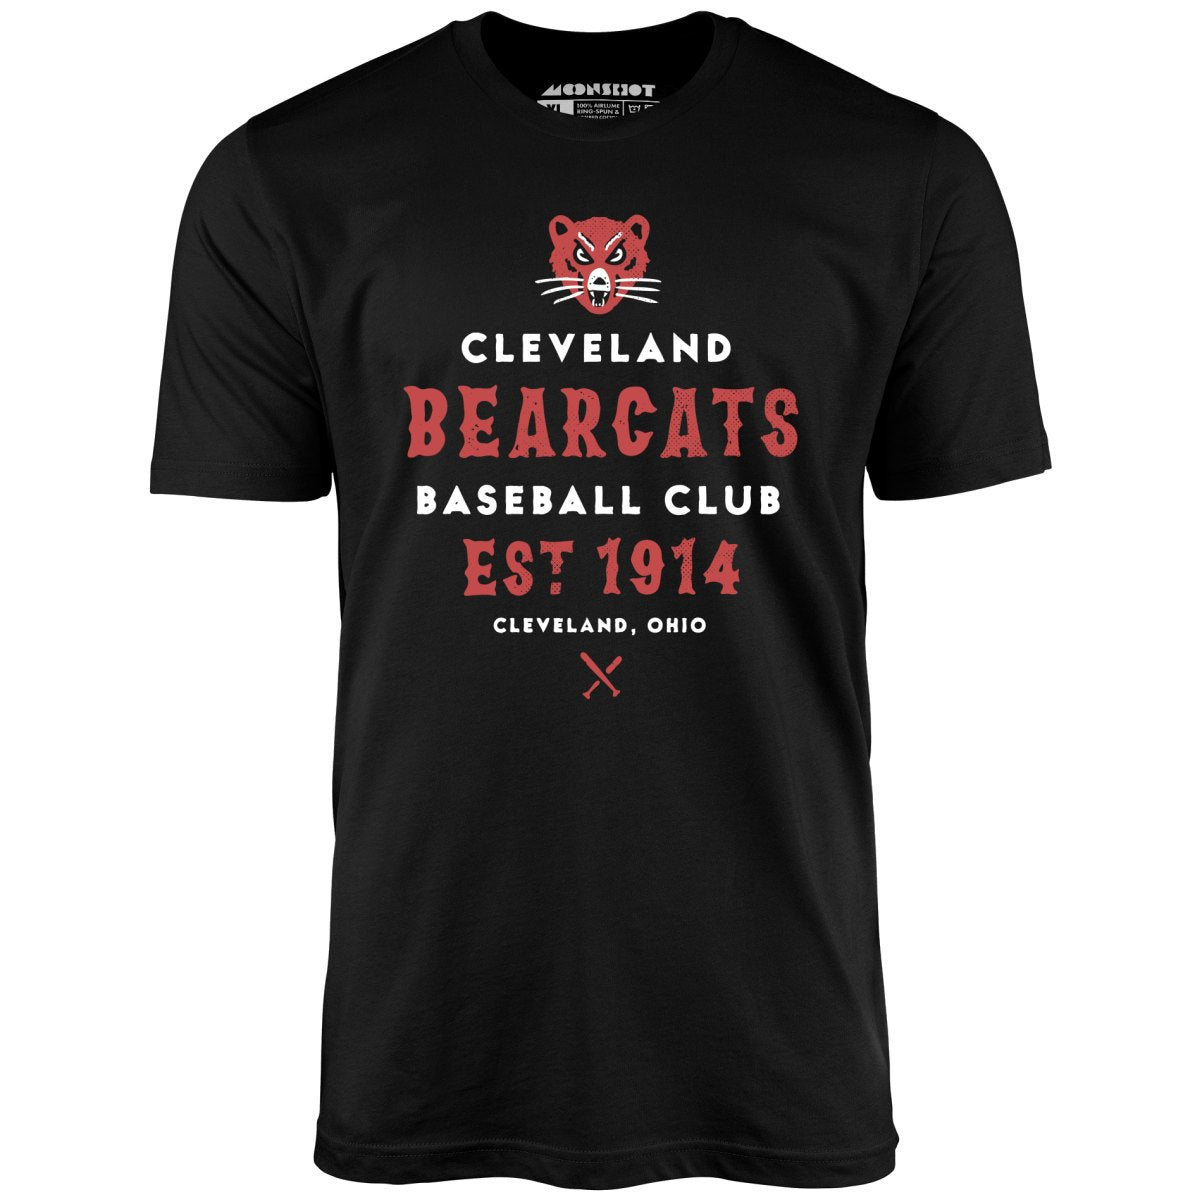 Cleveland Bearcats - Ohio - Vintage Defunct Baseball Teams - Unisex T-Shirt